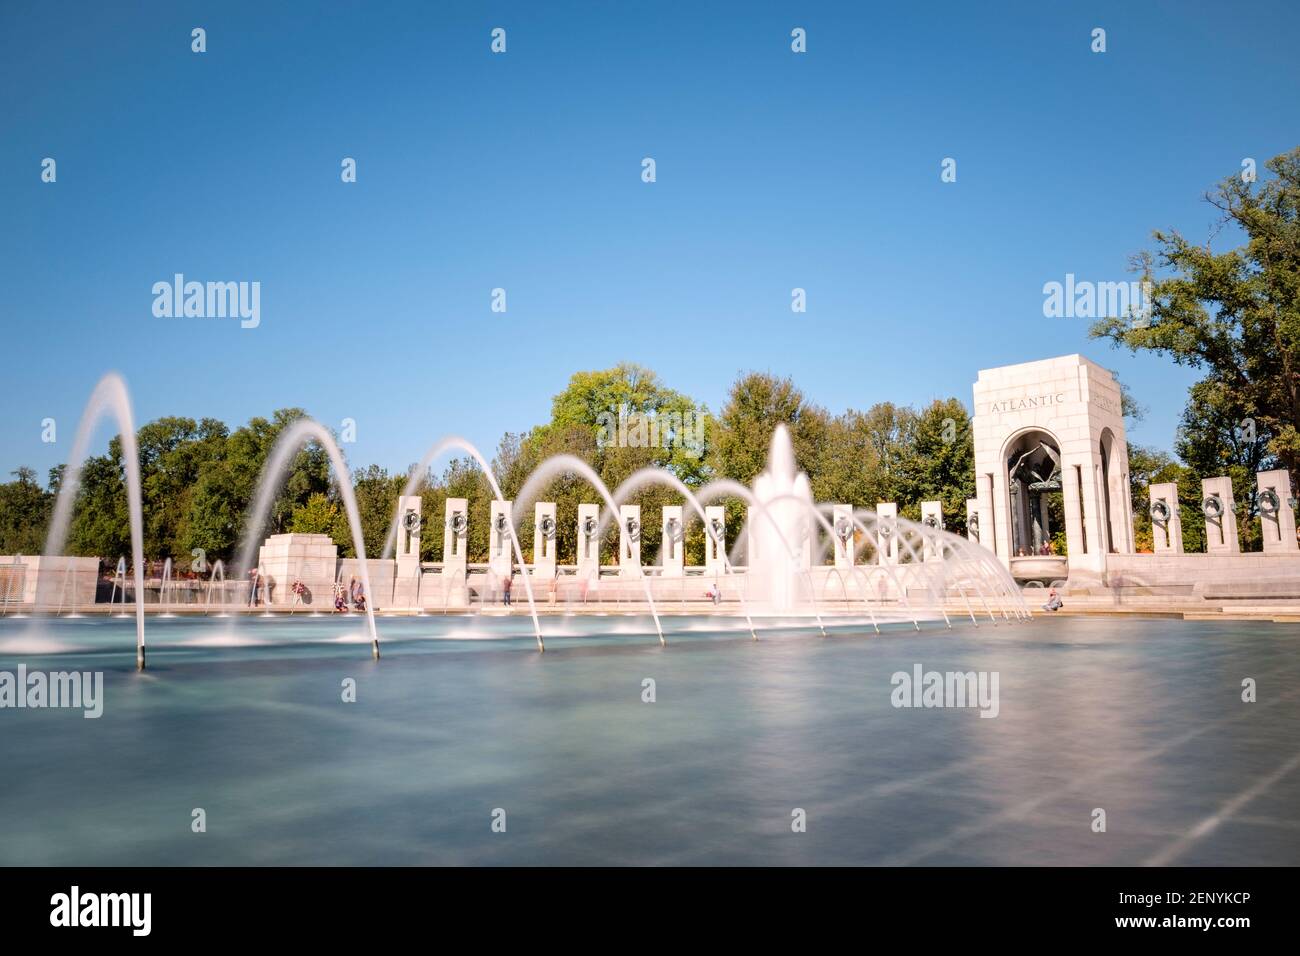 World War II Memorial water fountain, National Mall monuments, Washington D.C., USA. Stock Photo